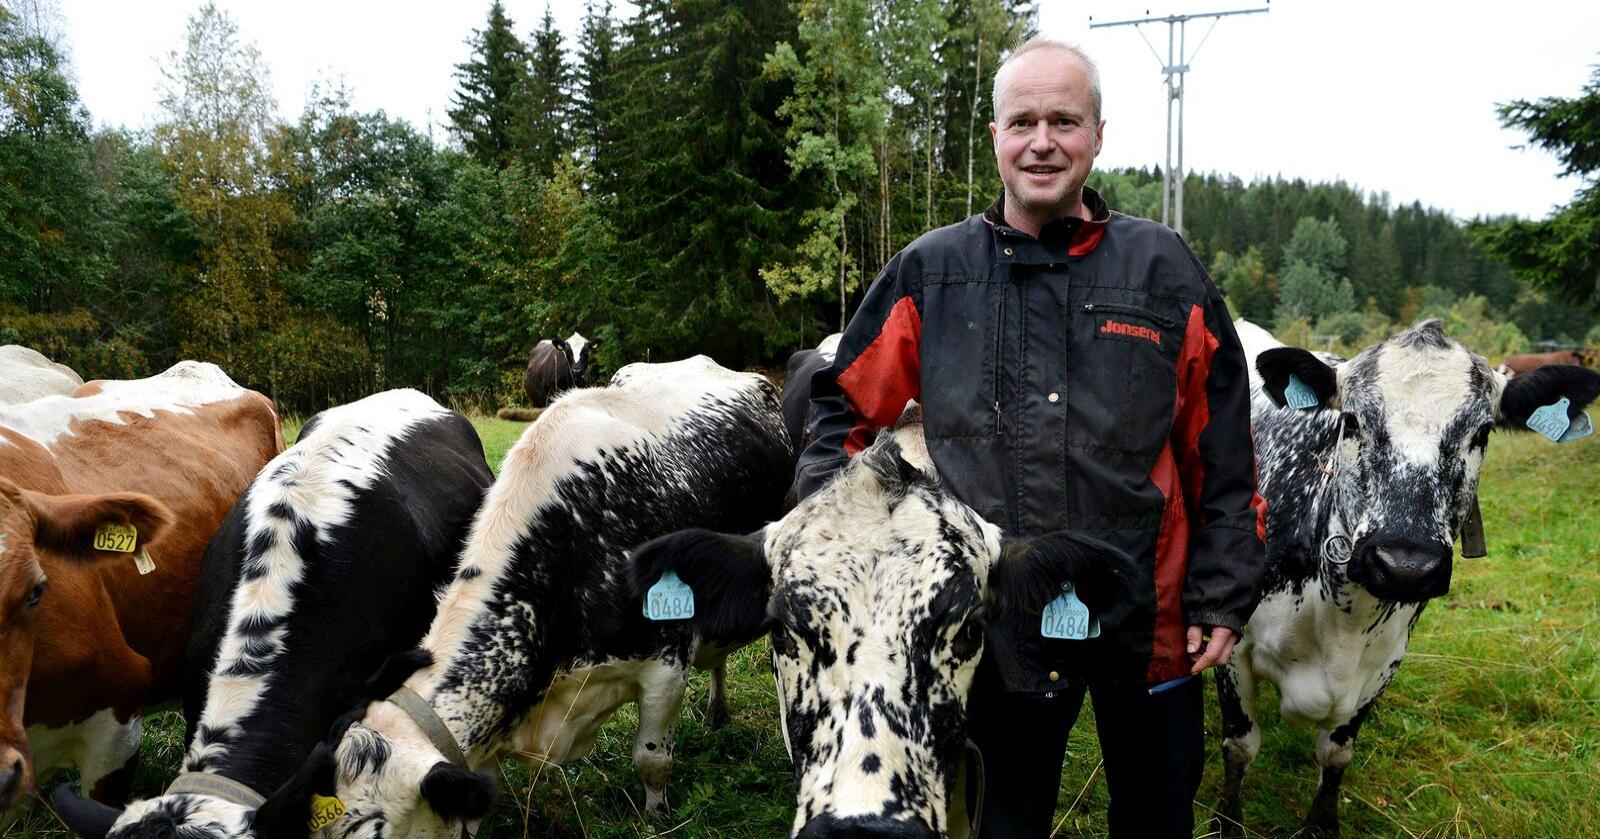 Ola Hammer Langleite driver med sidet trønder- og nordlandsfe i Snåsa, det kan være smart for andre også, mener han. Foto: Birger Ringseth